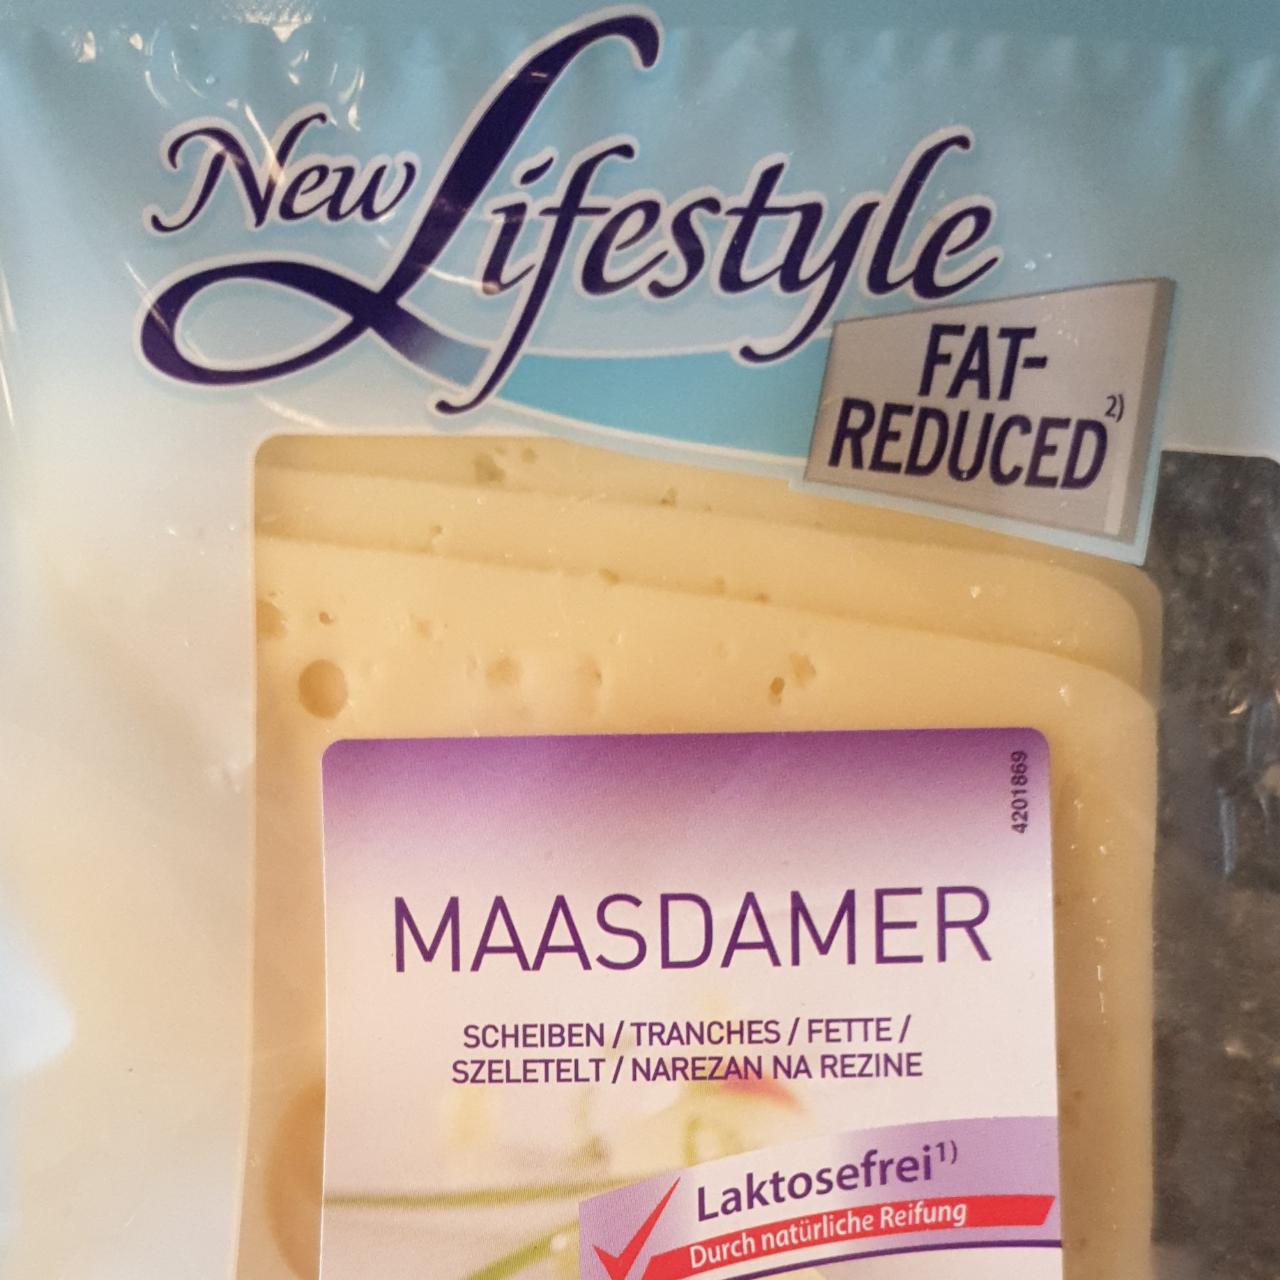 Fotografie - Maasdamer fat-reduced Laktosefrei New Lifestyle